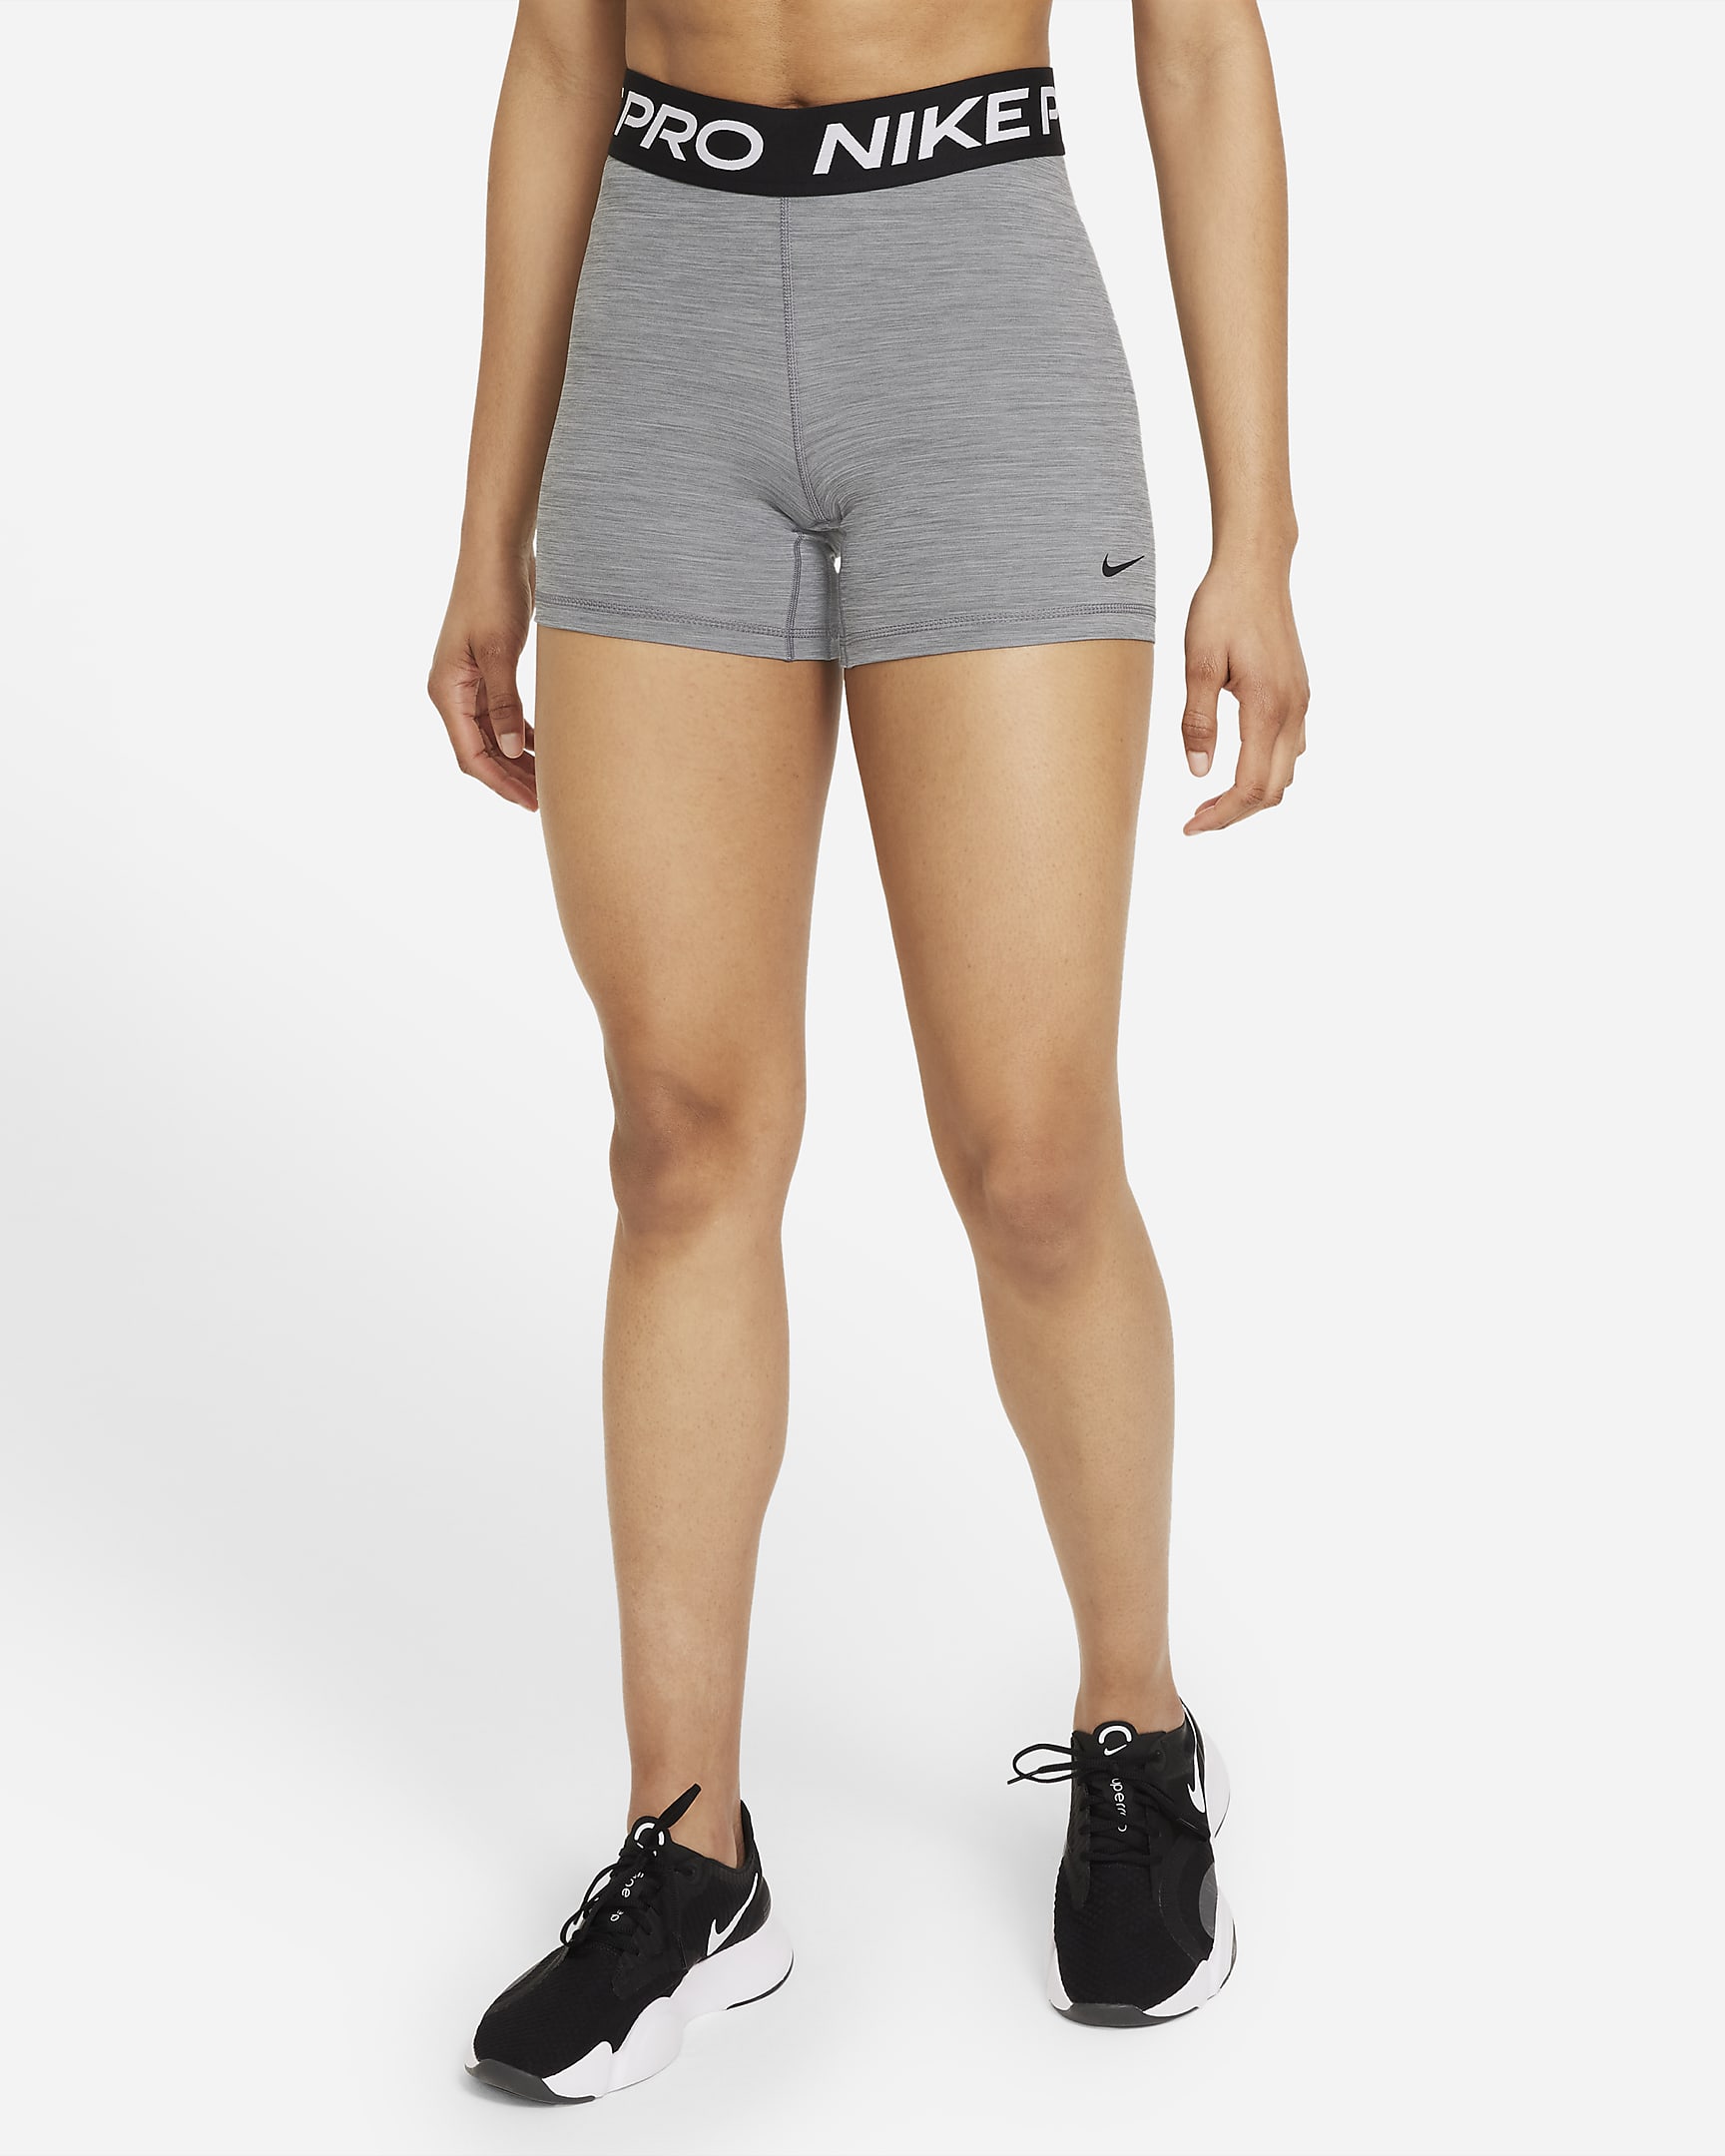 Шорт 365. Nike шорты w NP 365 short 5in. Nike Pro Dri-Fit women's 18cm (approx.) High-Rise Training shorts. Athletic Pro шорты серые. Заказать белые шорты Nike Pro 365 женские.